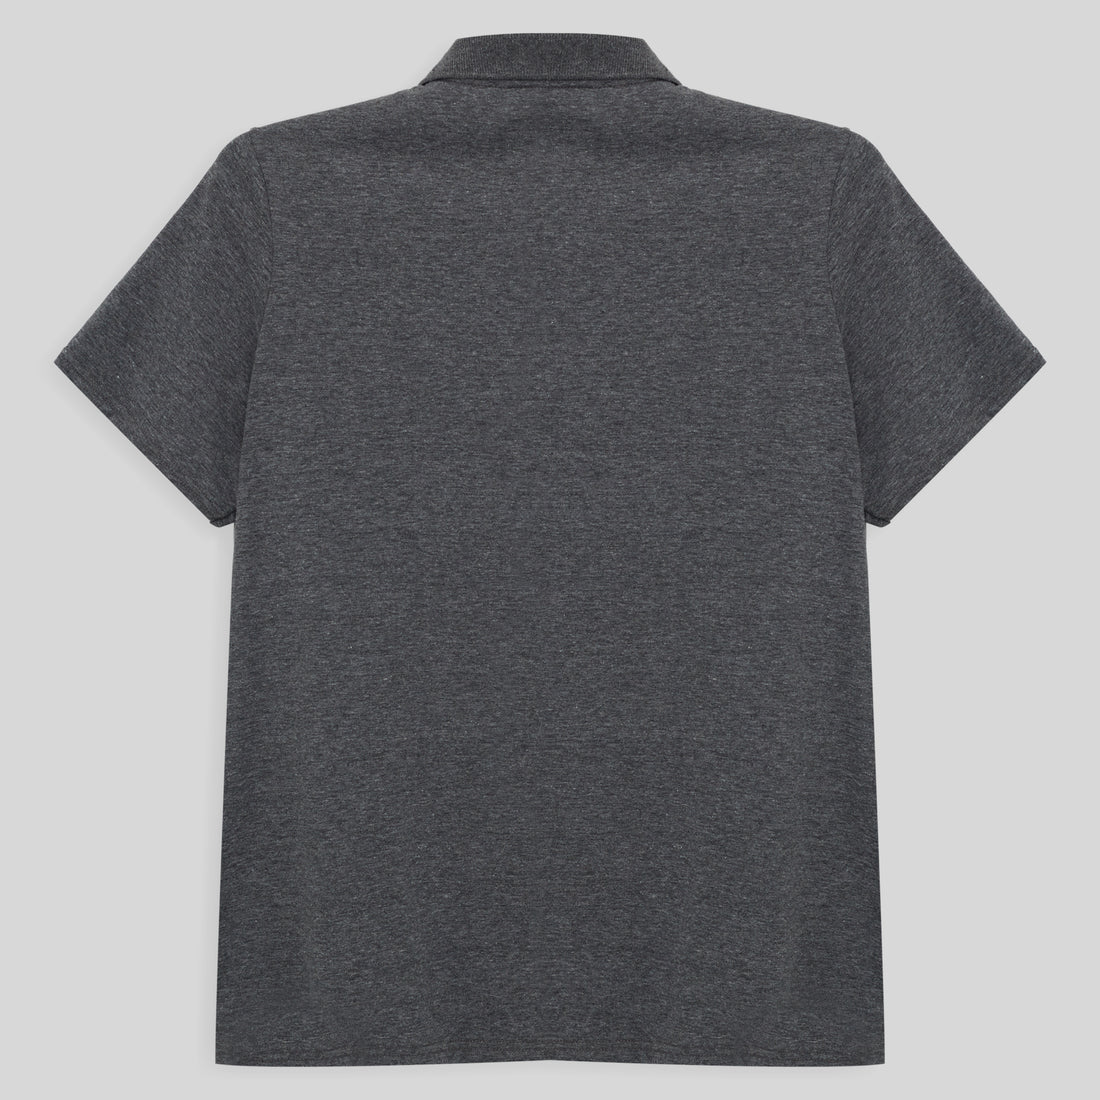 Camisa Polo Algodão Premium Plus Size Feminino - Mescla Escuro